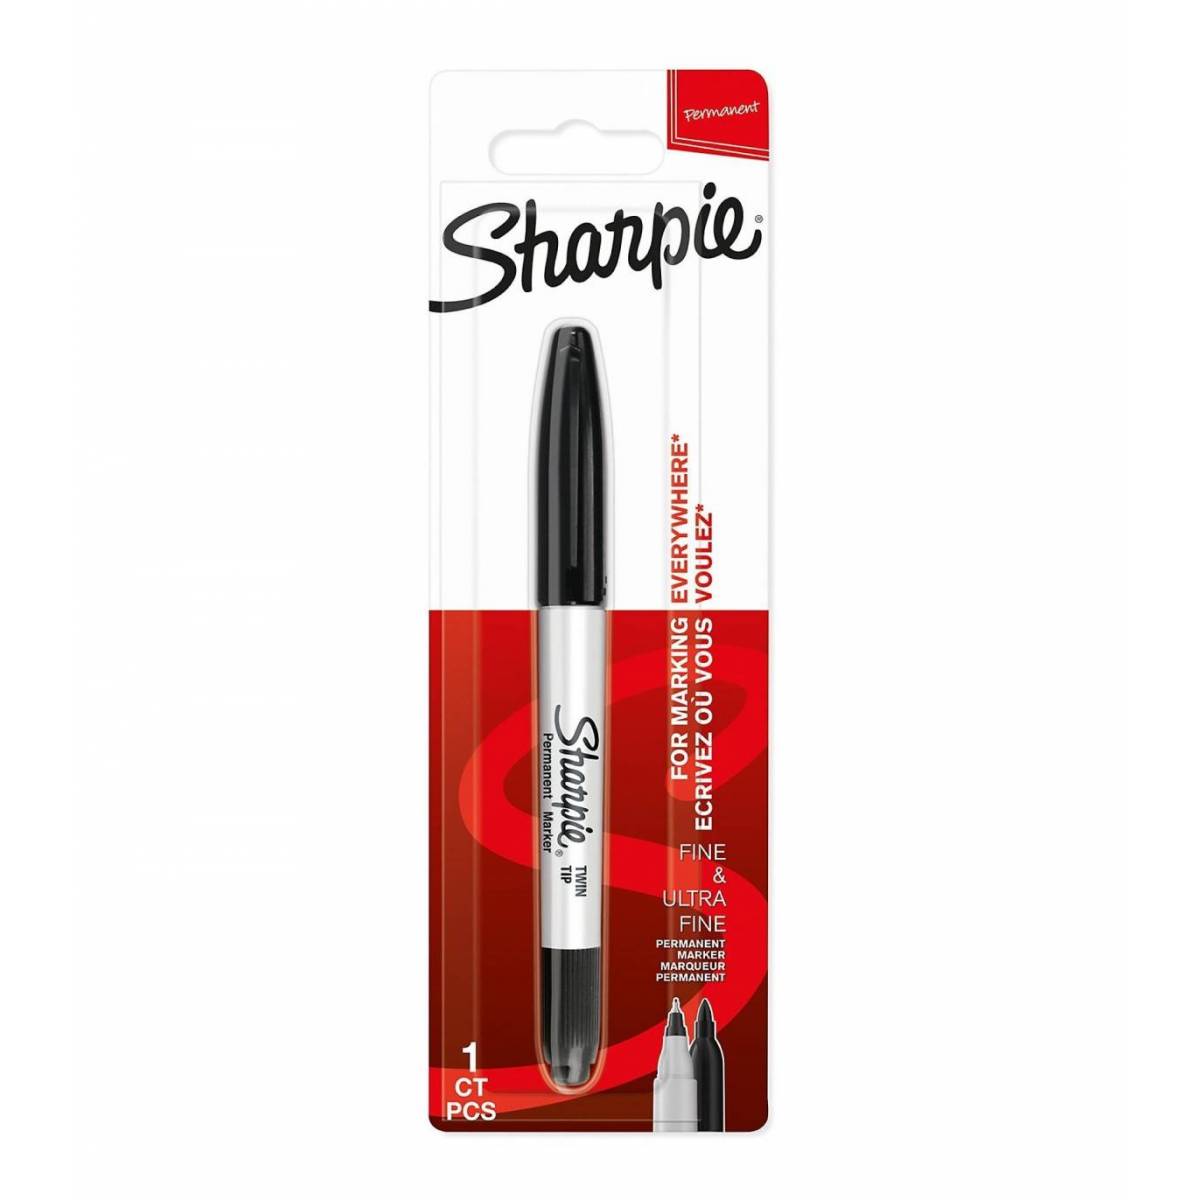 Sharpie Twin Tip Black Permanent Marker